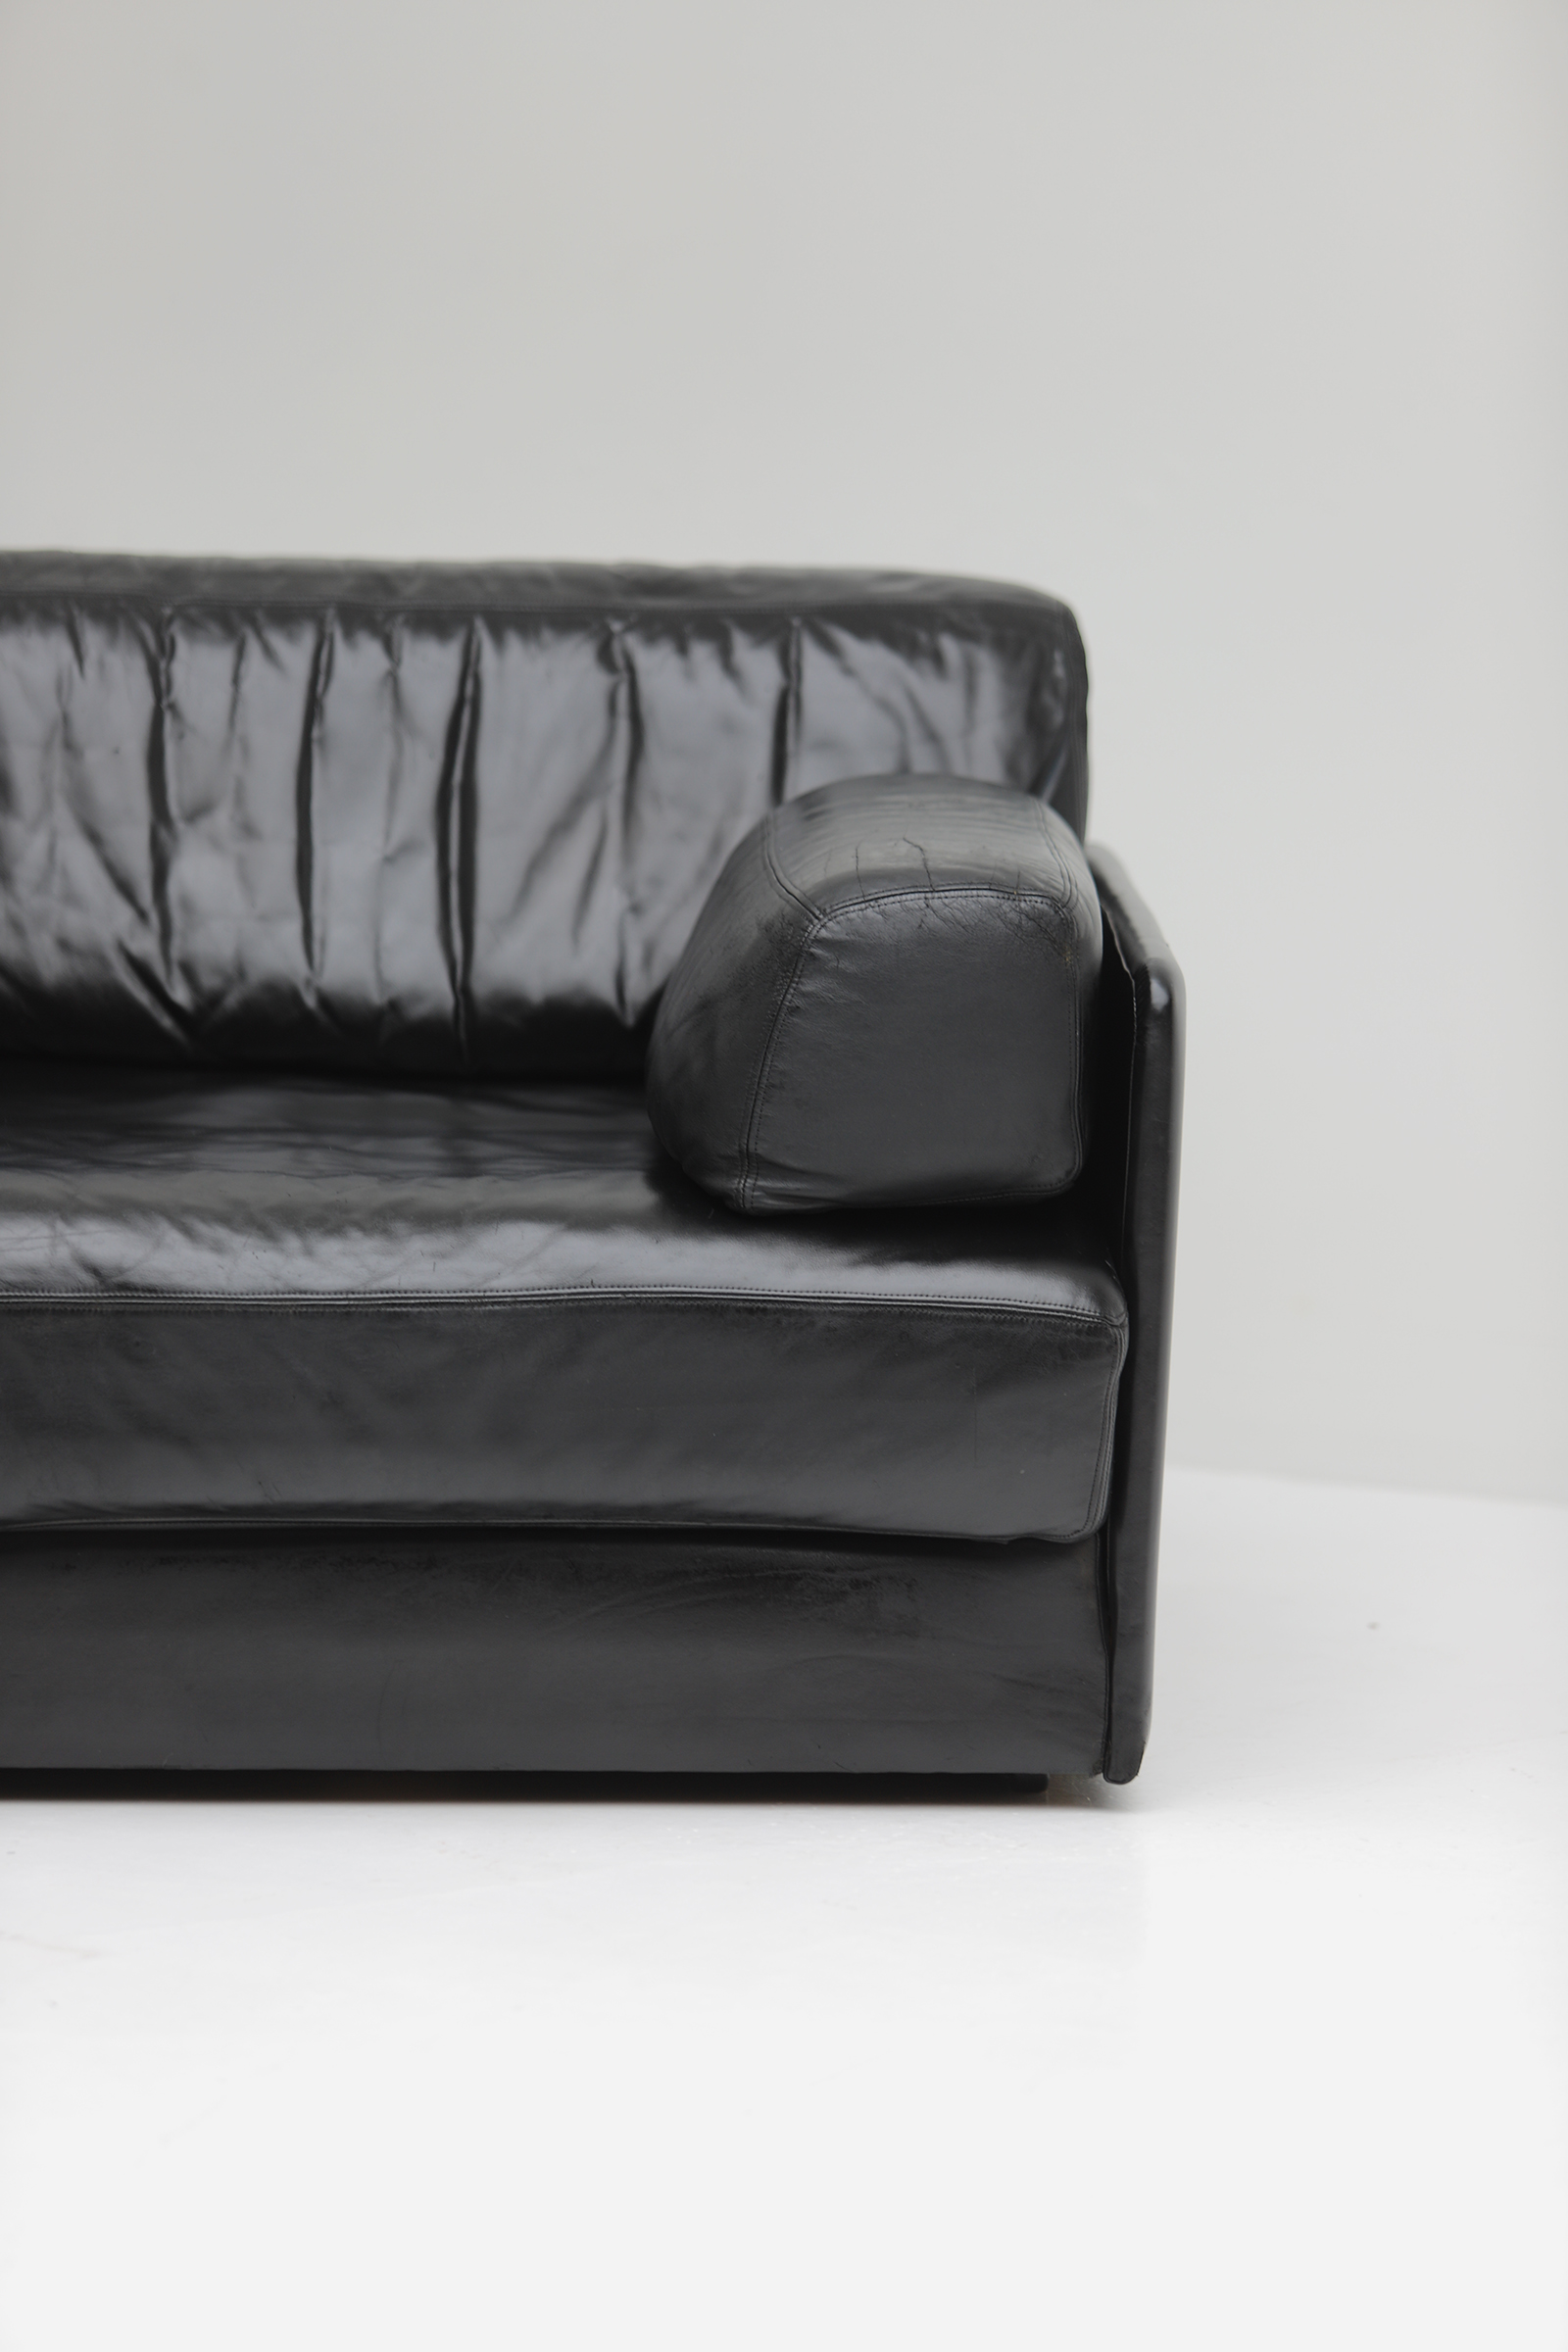 De Sede DS 76 Black Leather Sofa image 3